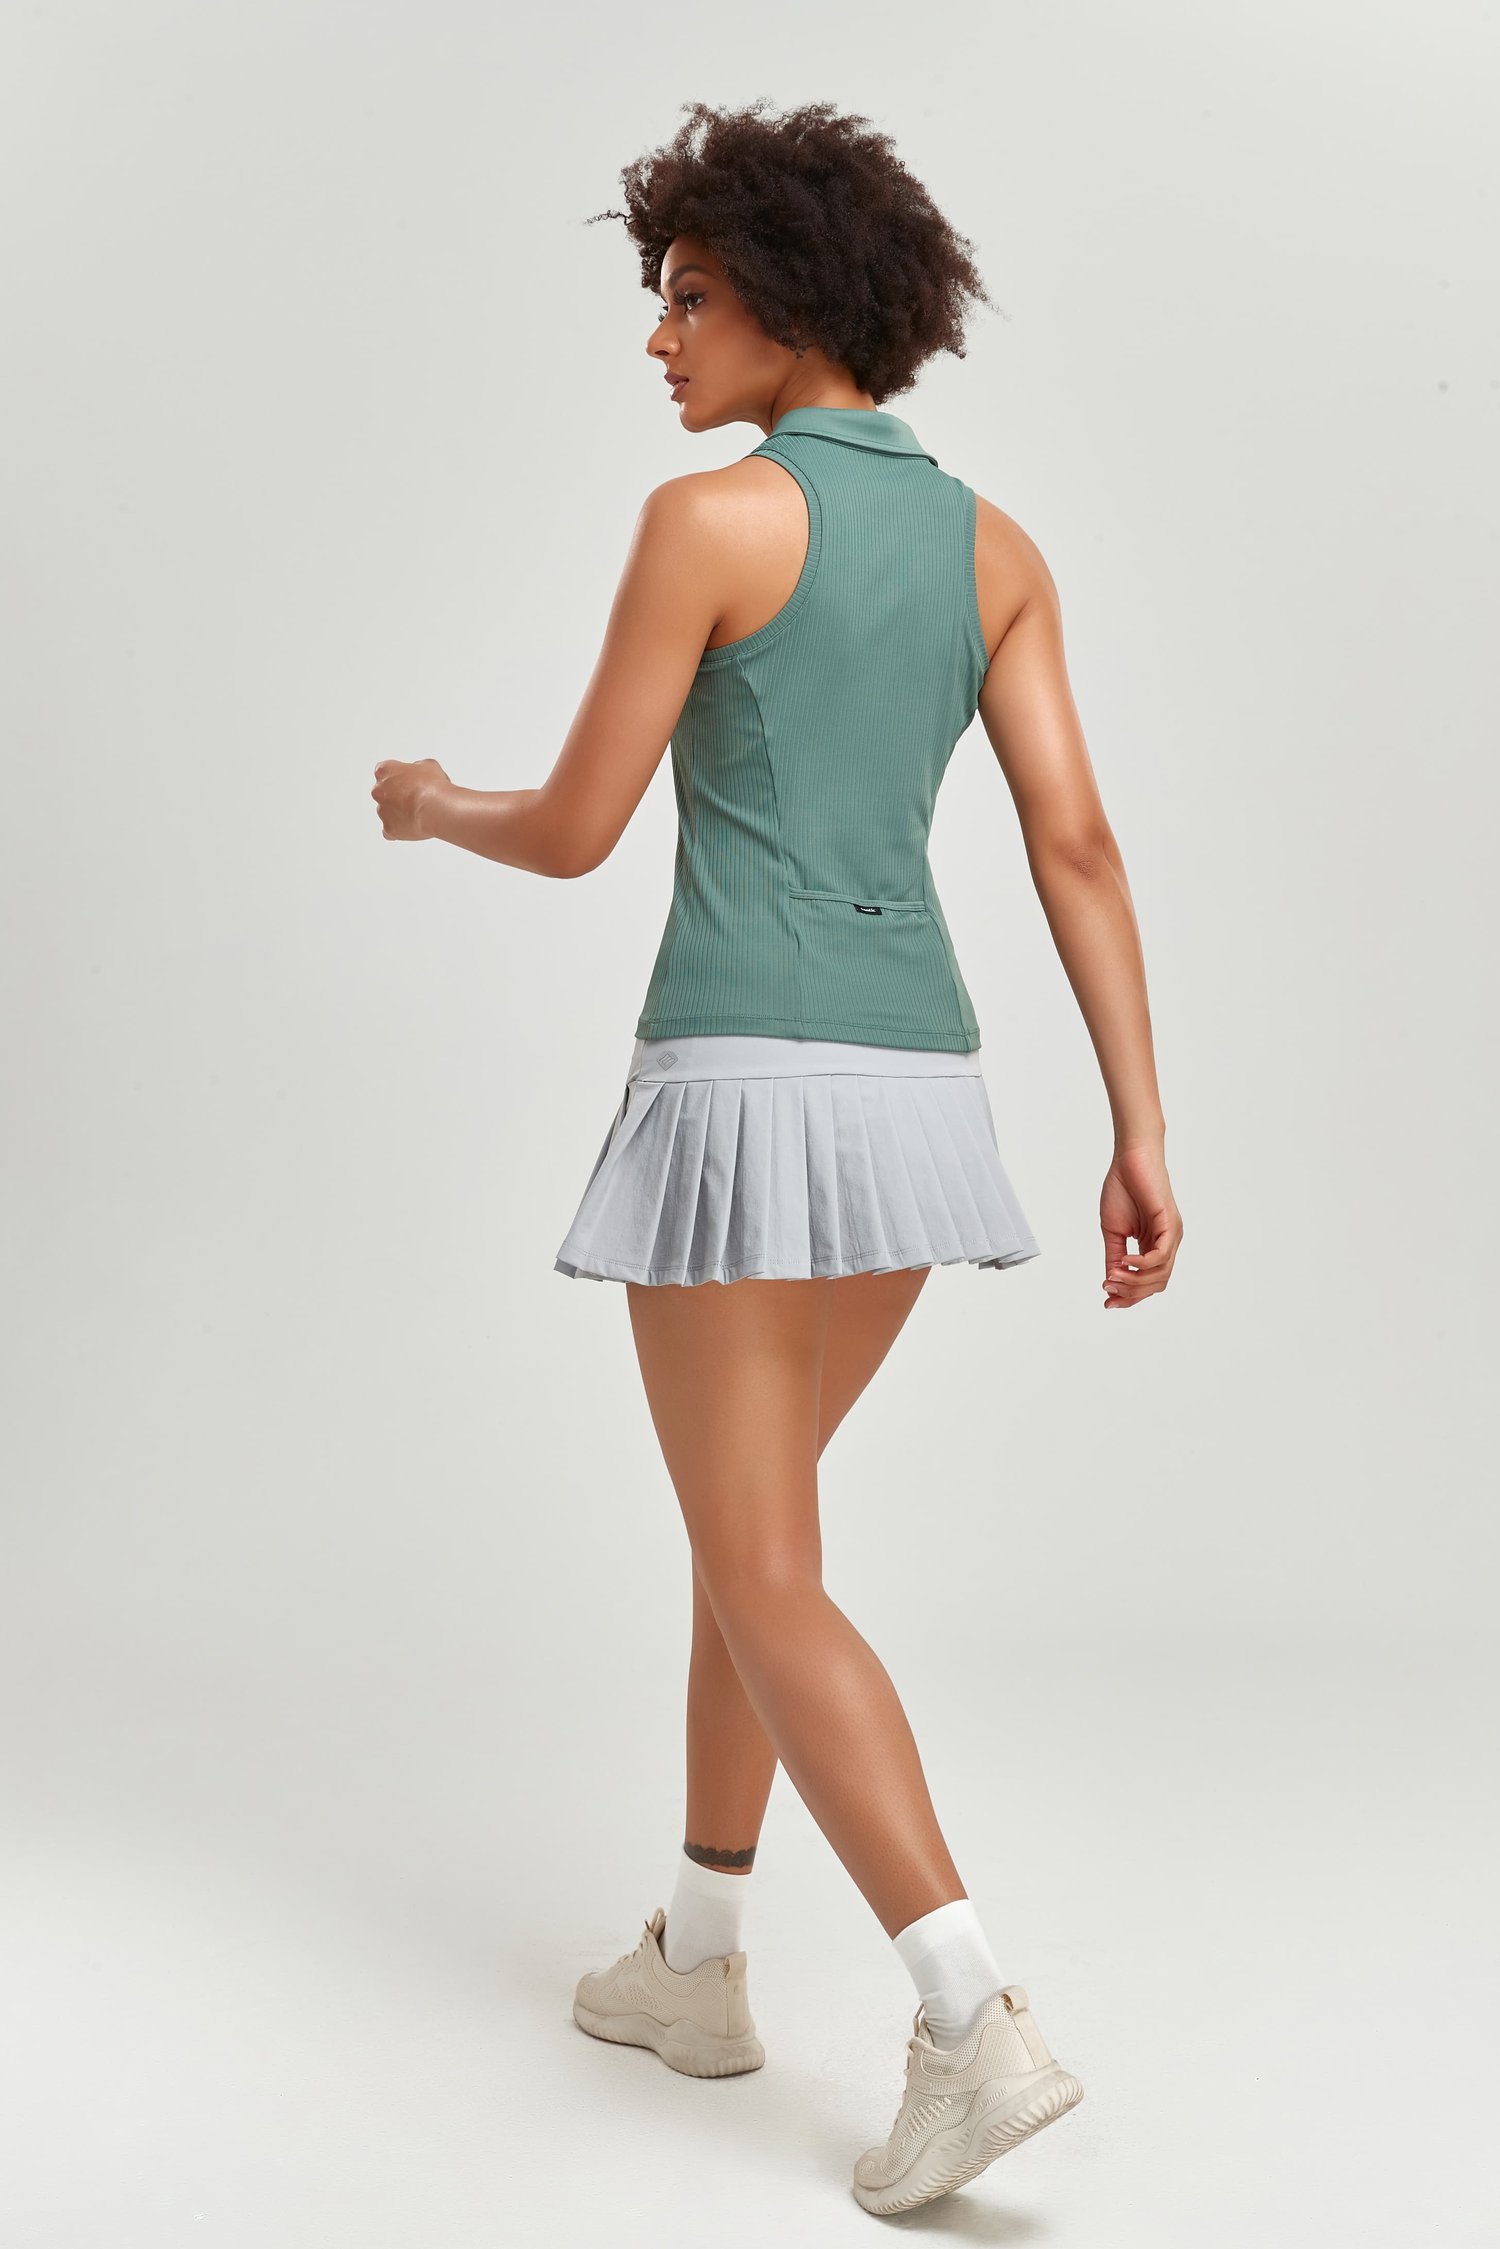 Women's Tennis Clothing